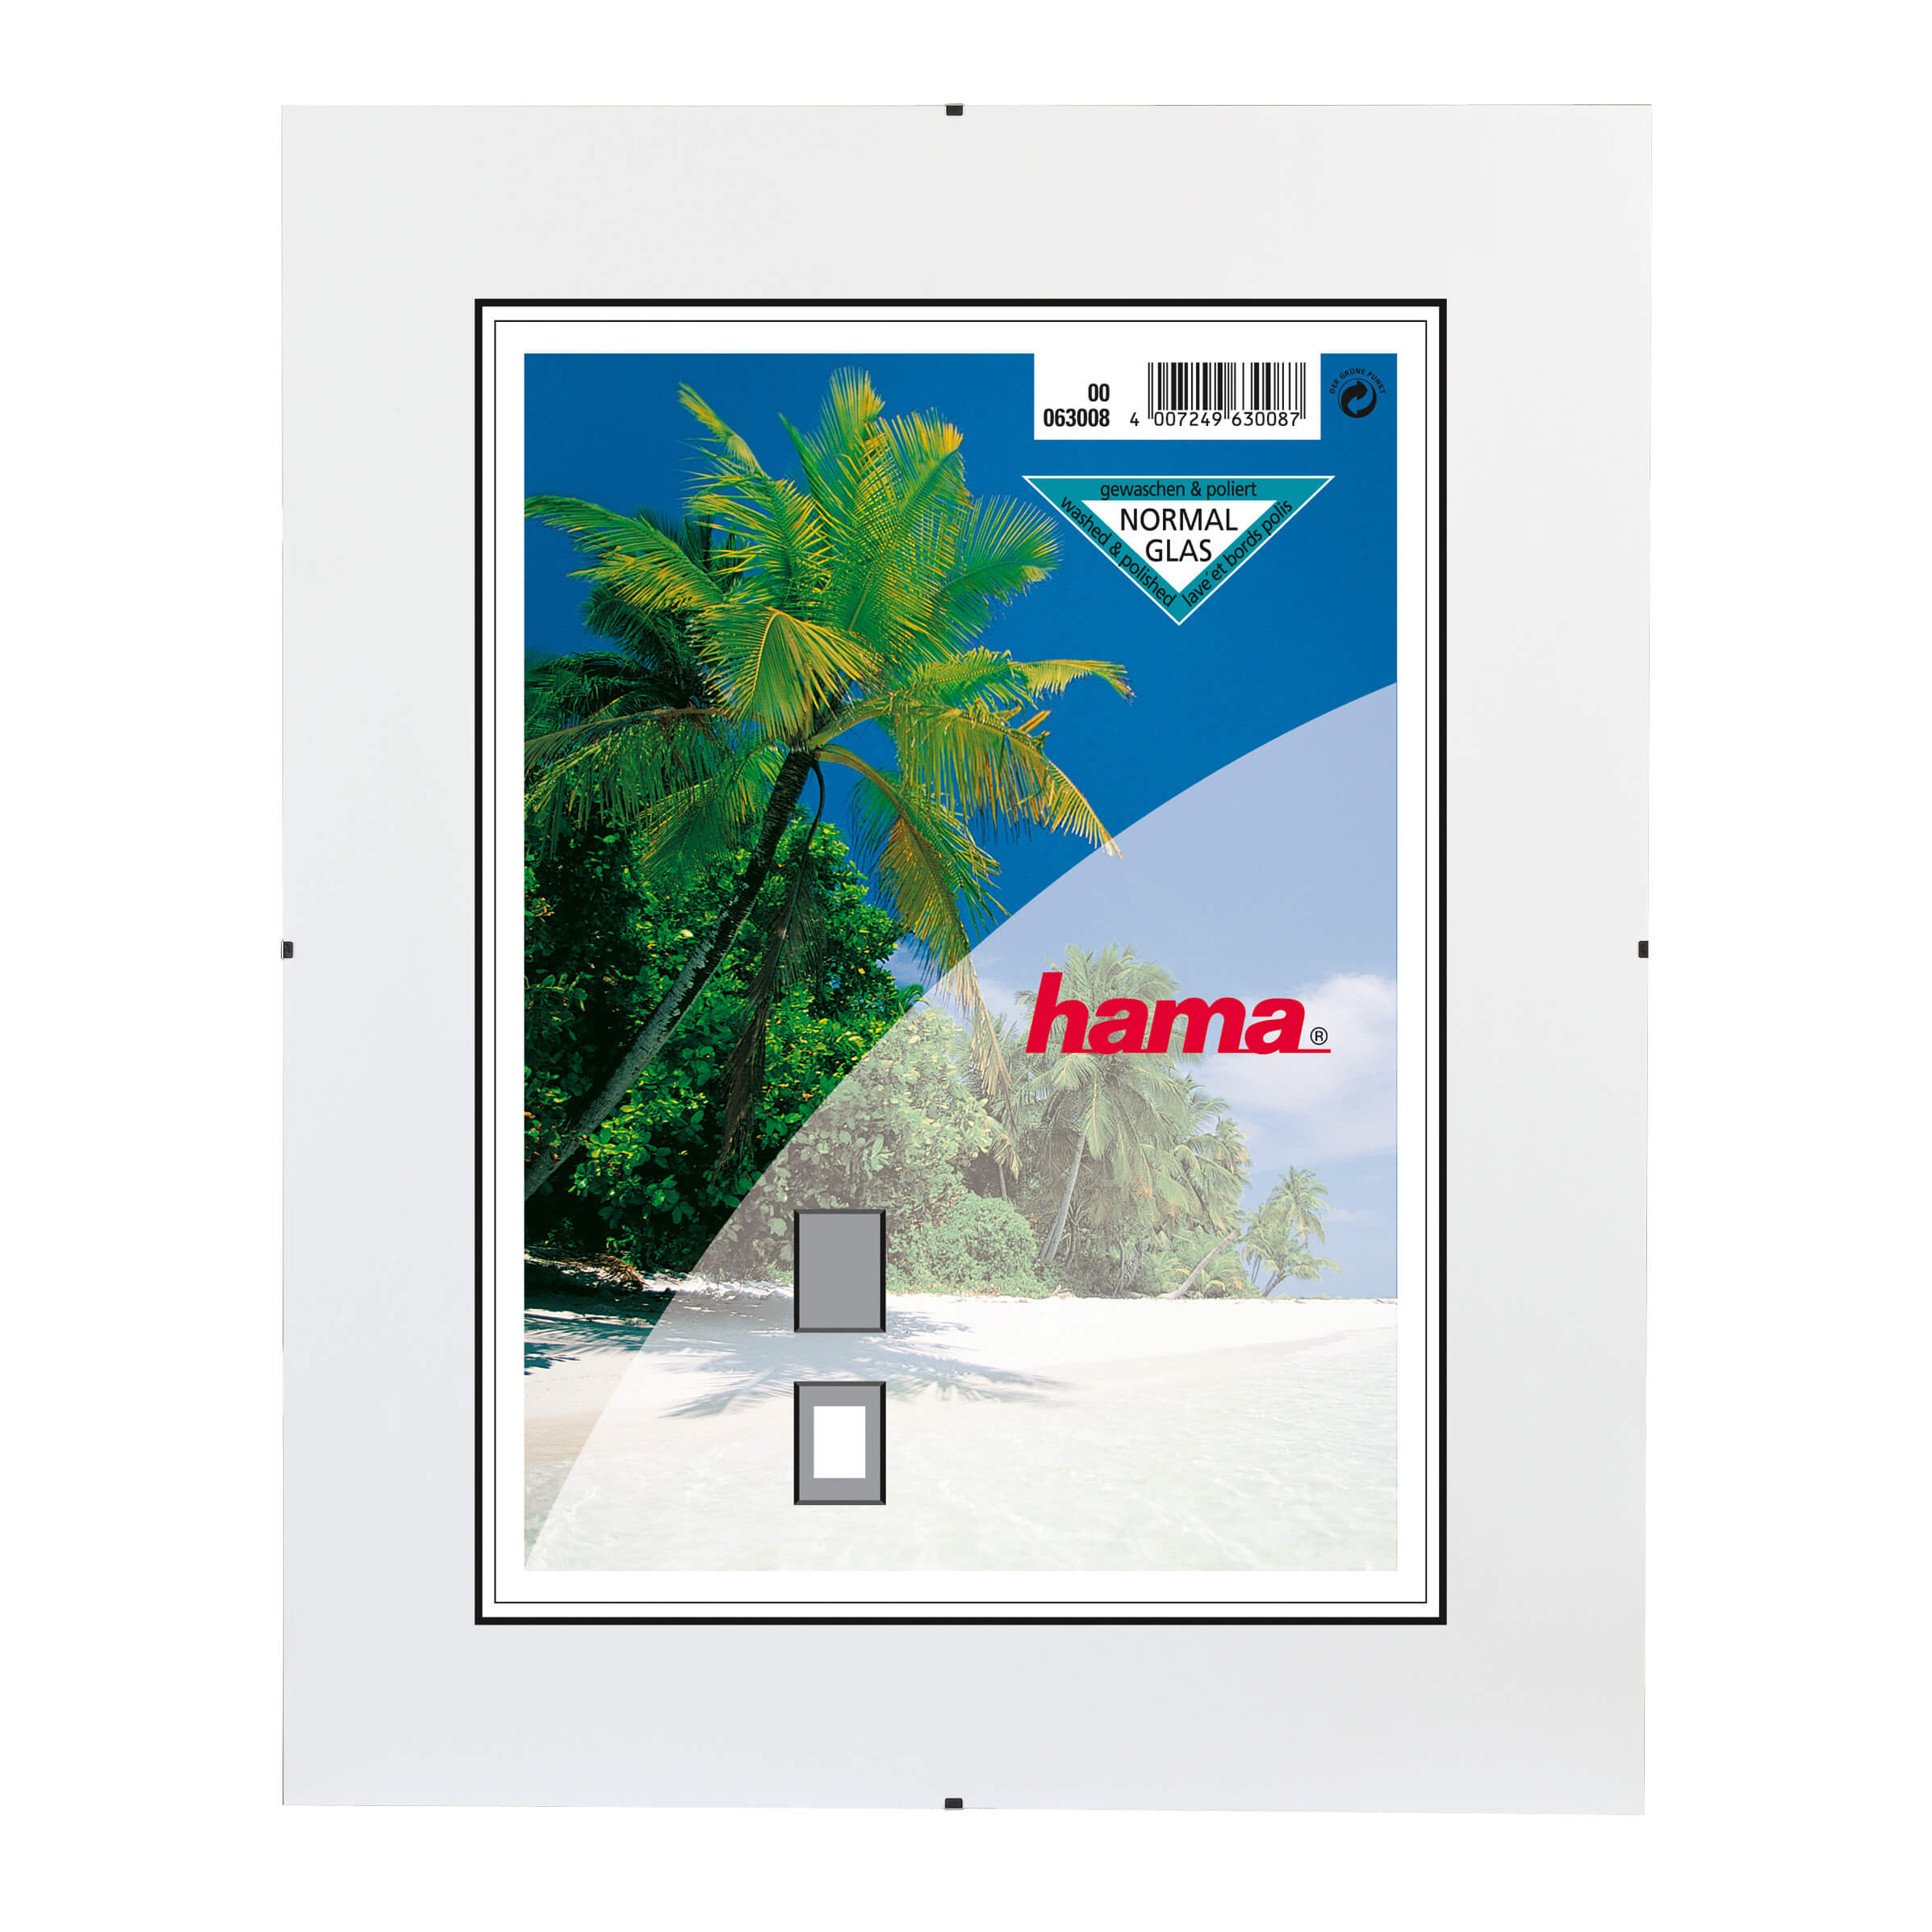 HAMA Clip-Fix Frameless Picture Ho lder, normal glass, 15 x21 cm